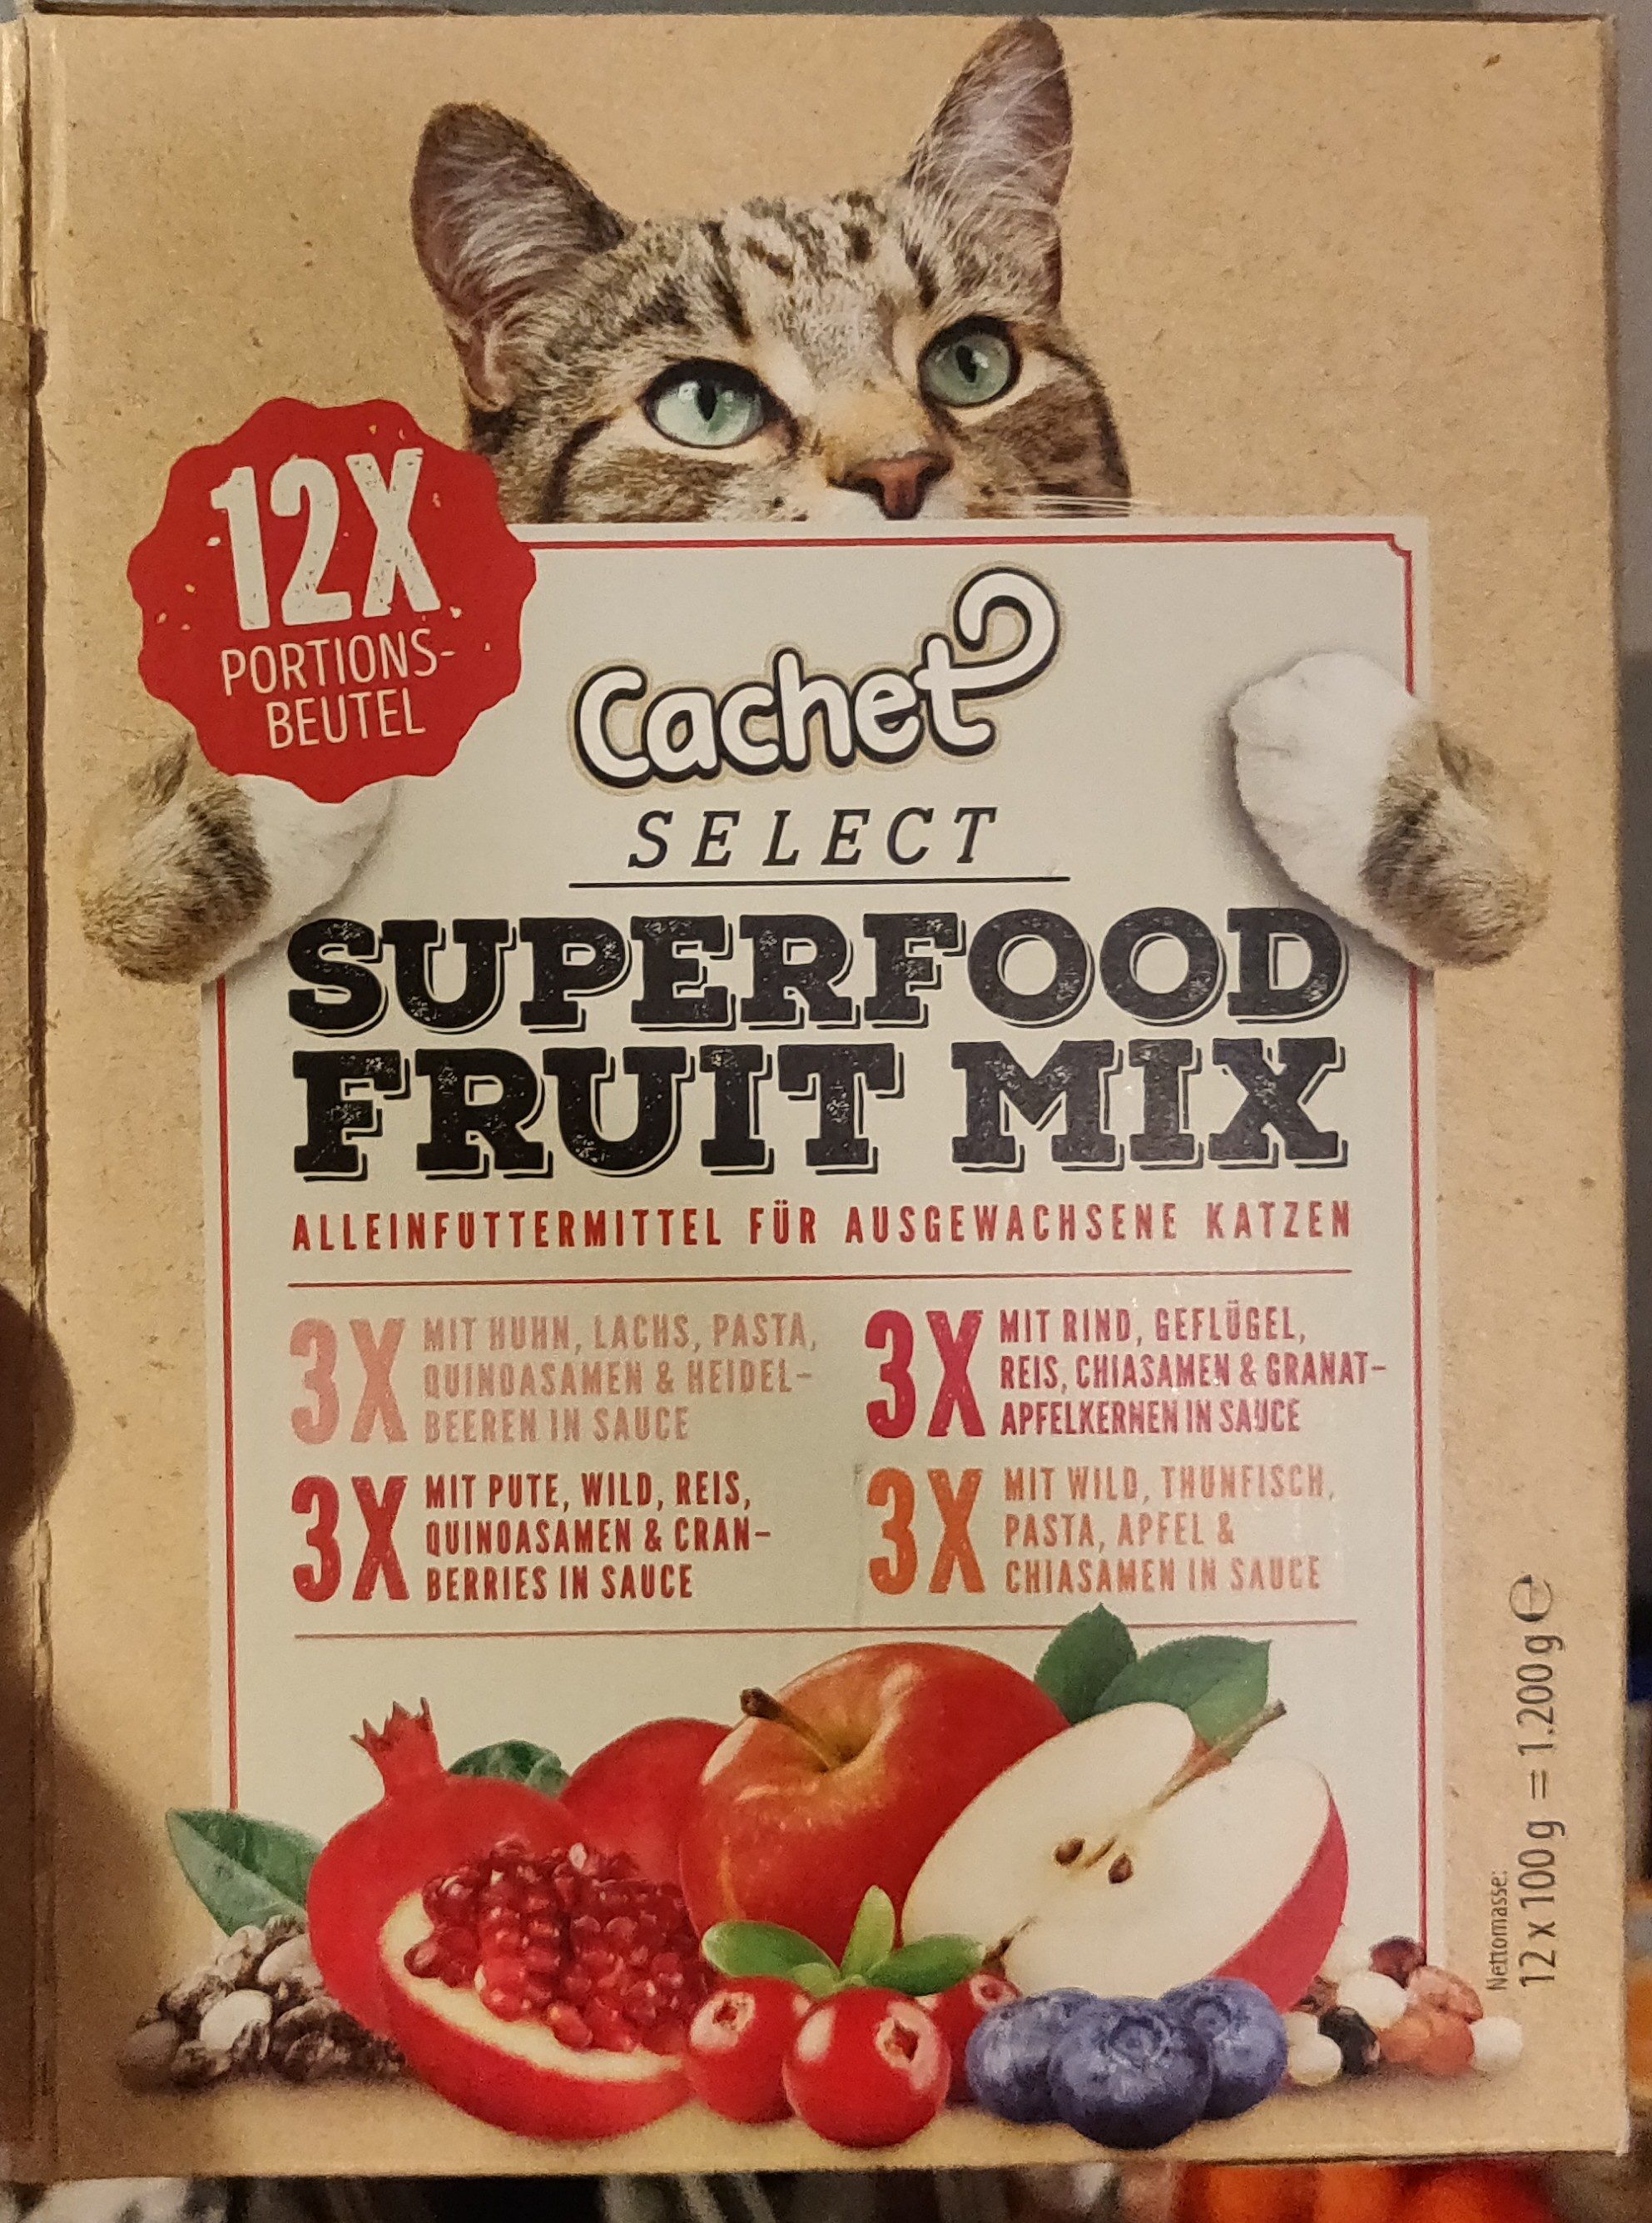 Superfood Fruit Mix - Product - en